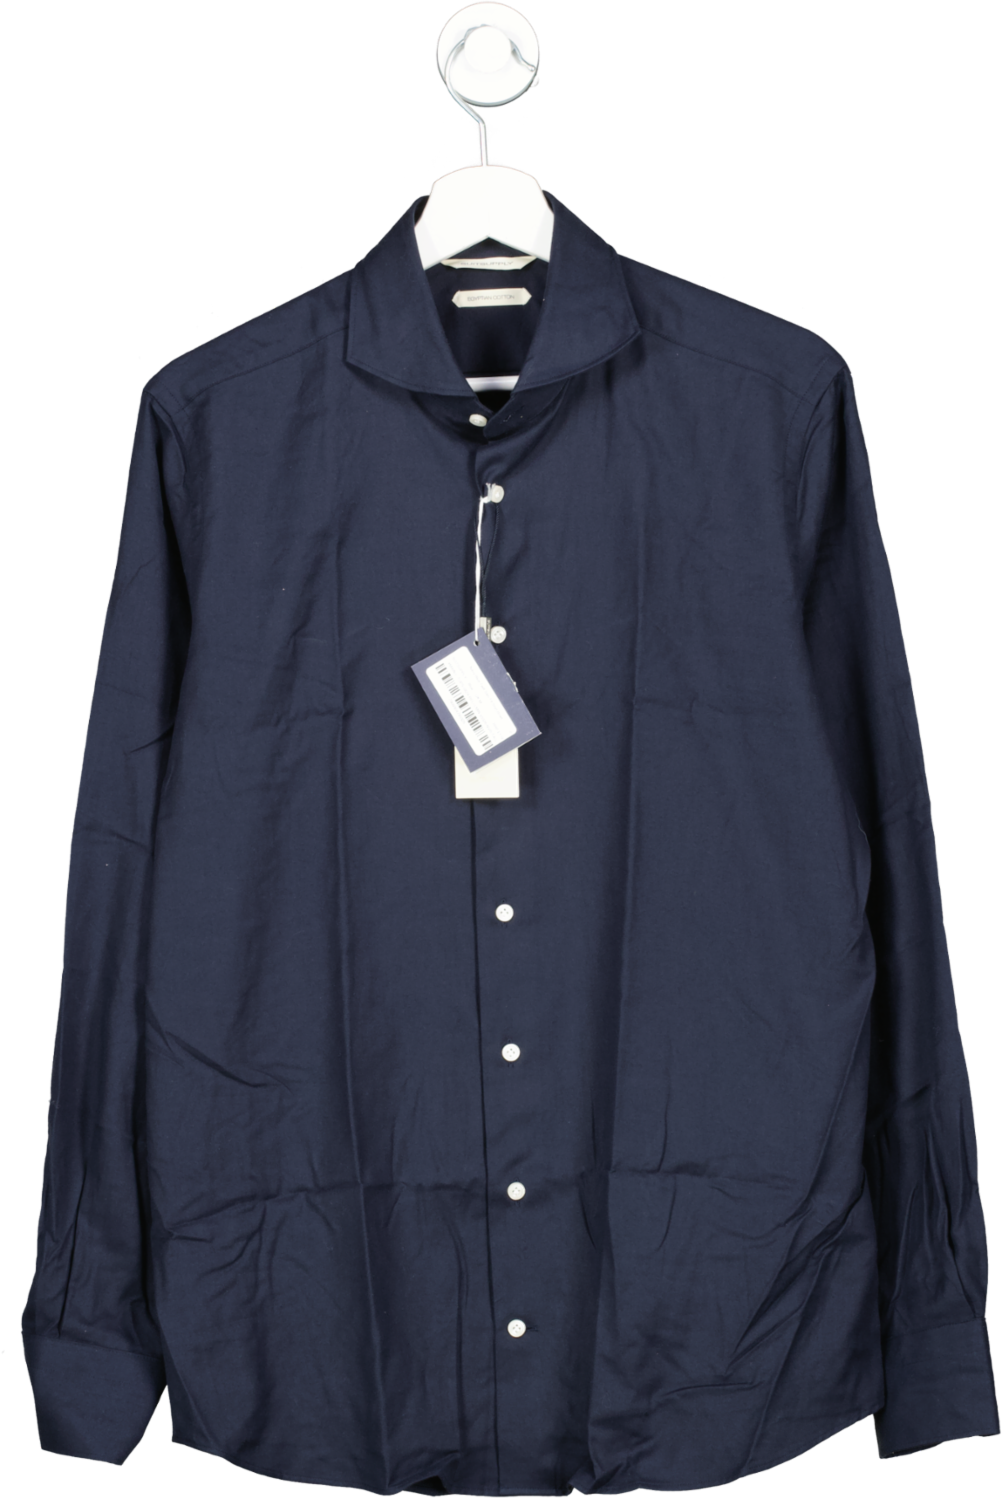 SUITSUPPLY Navy Blue Twill Slim Fit Shirt BNWT UK M